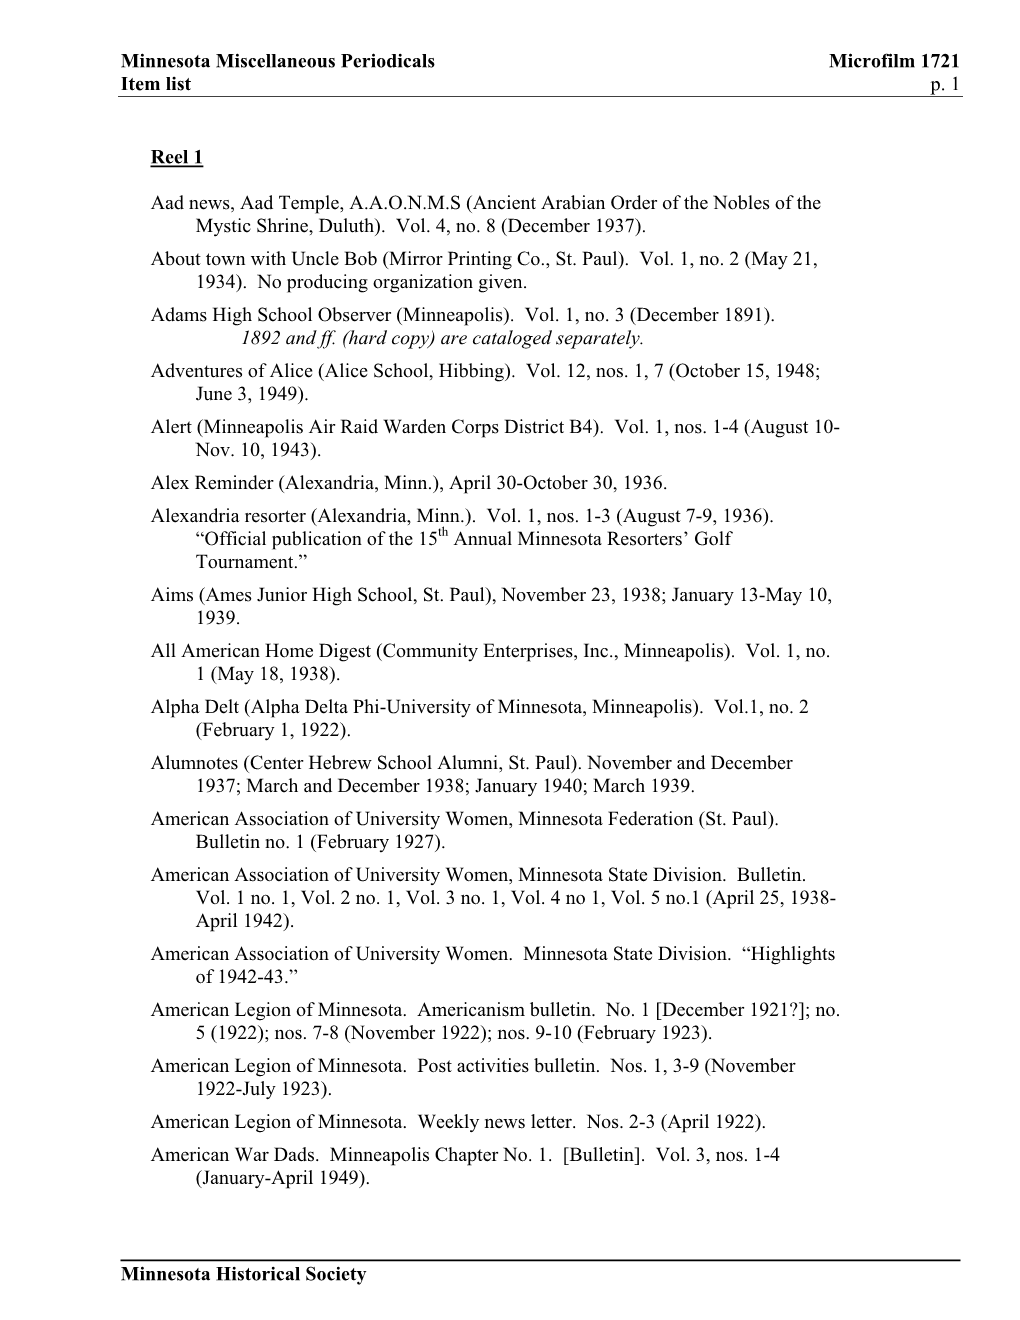 Minnesota Miscellaneous Periodicals : November 1875-September 6, 1962